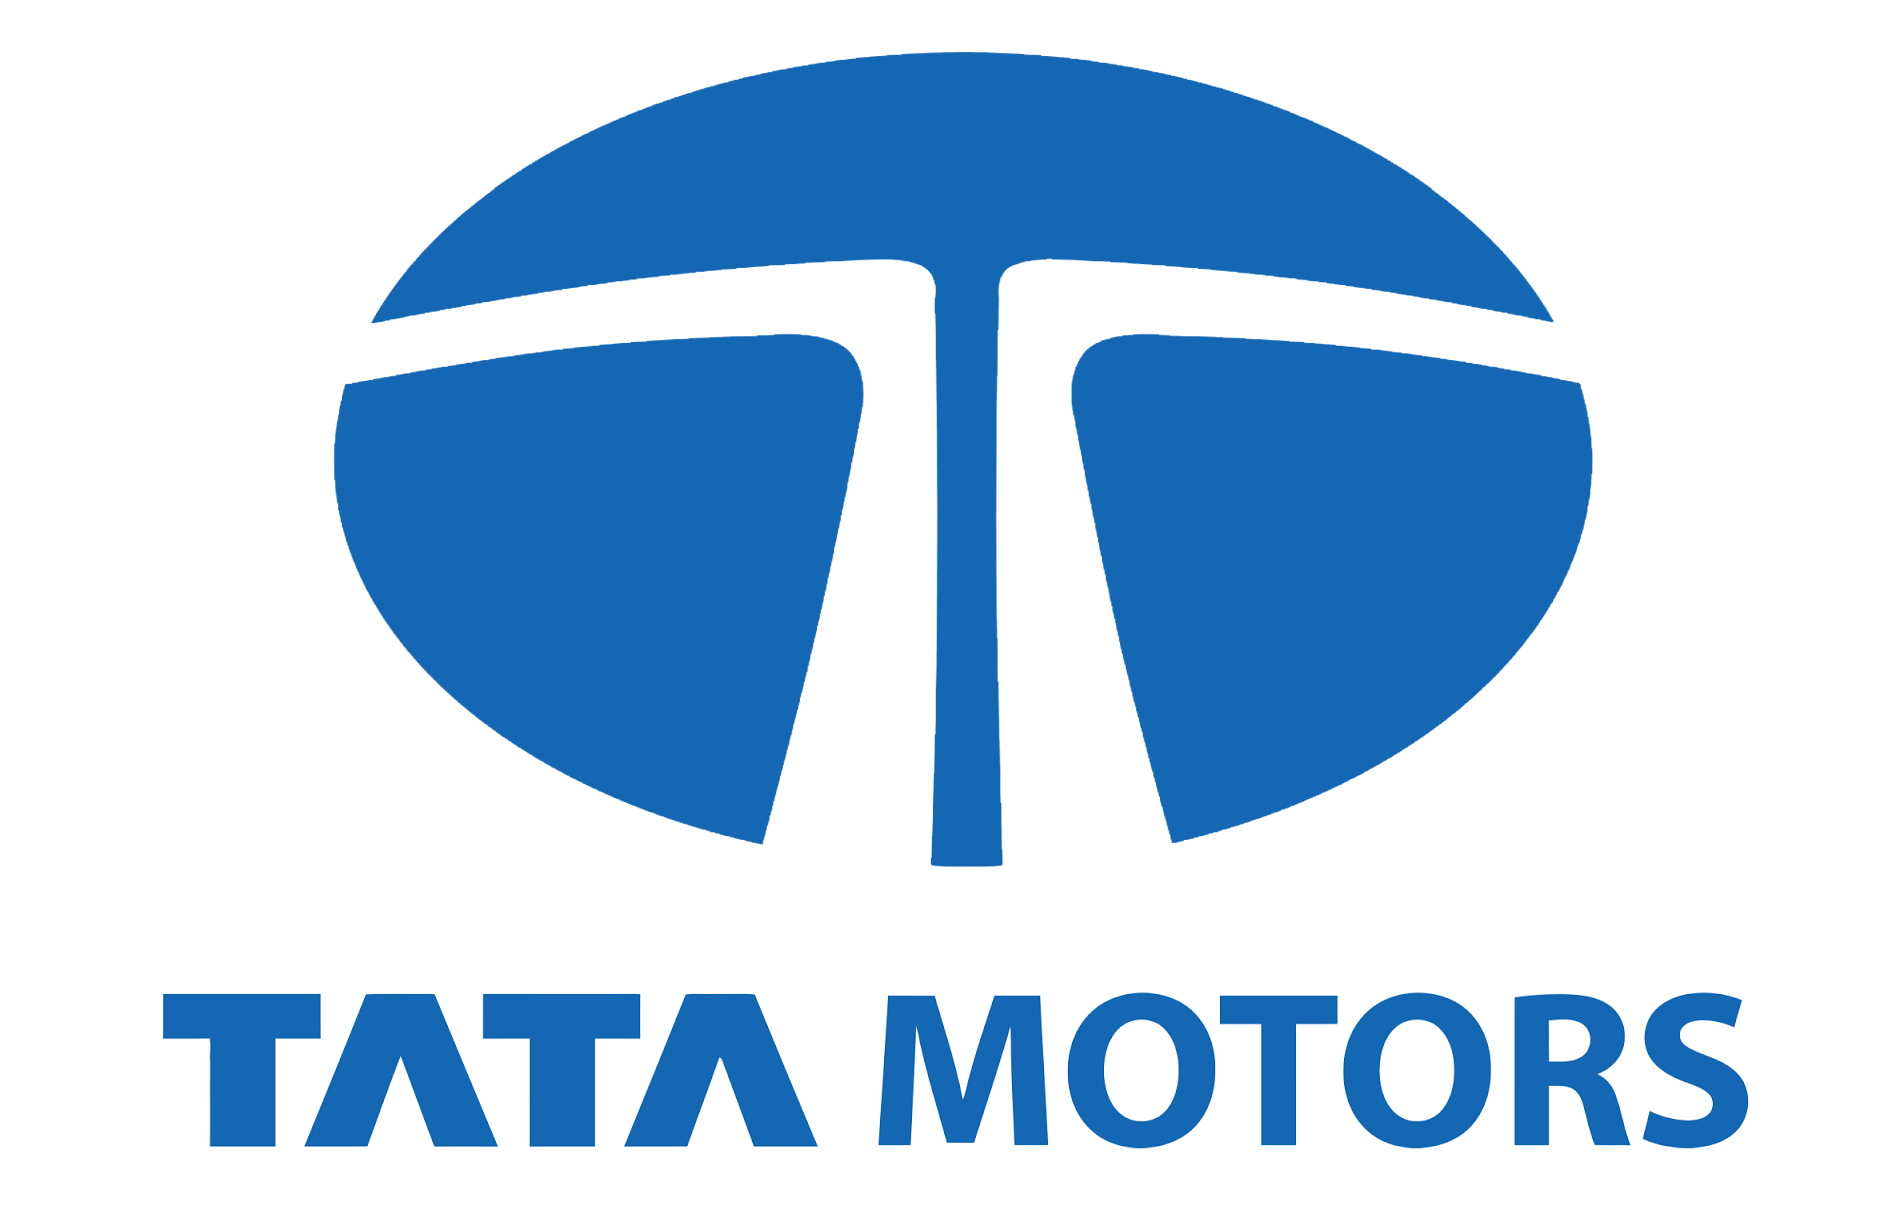 Tata Motors Cars Showroom - Malik Cars|Show Room|Automotive